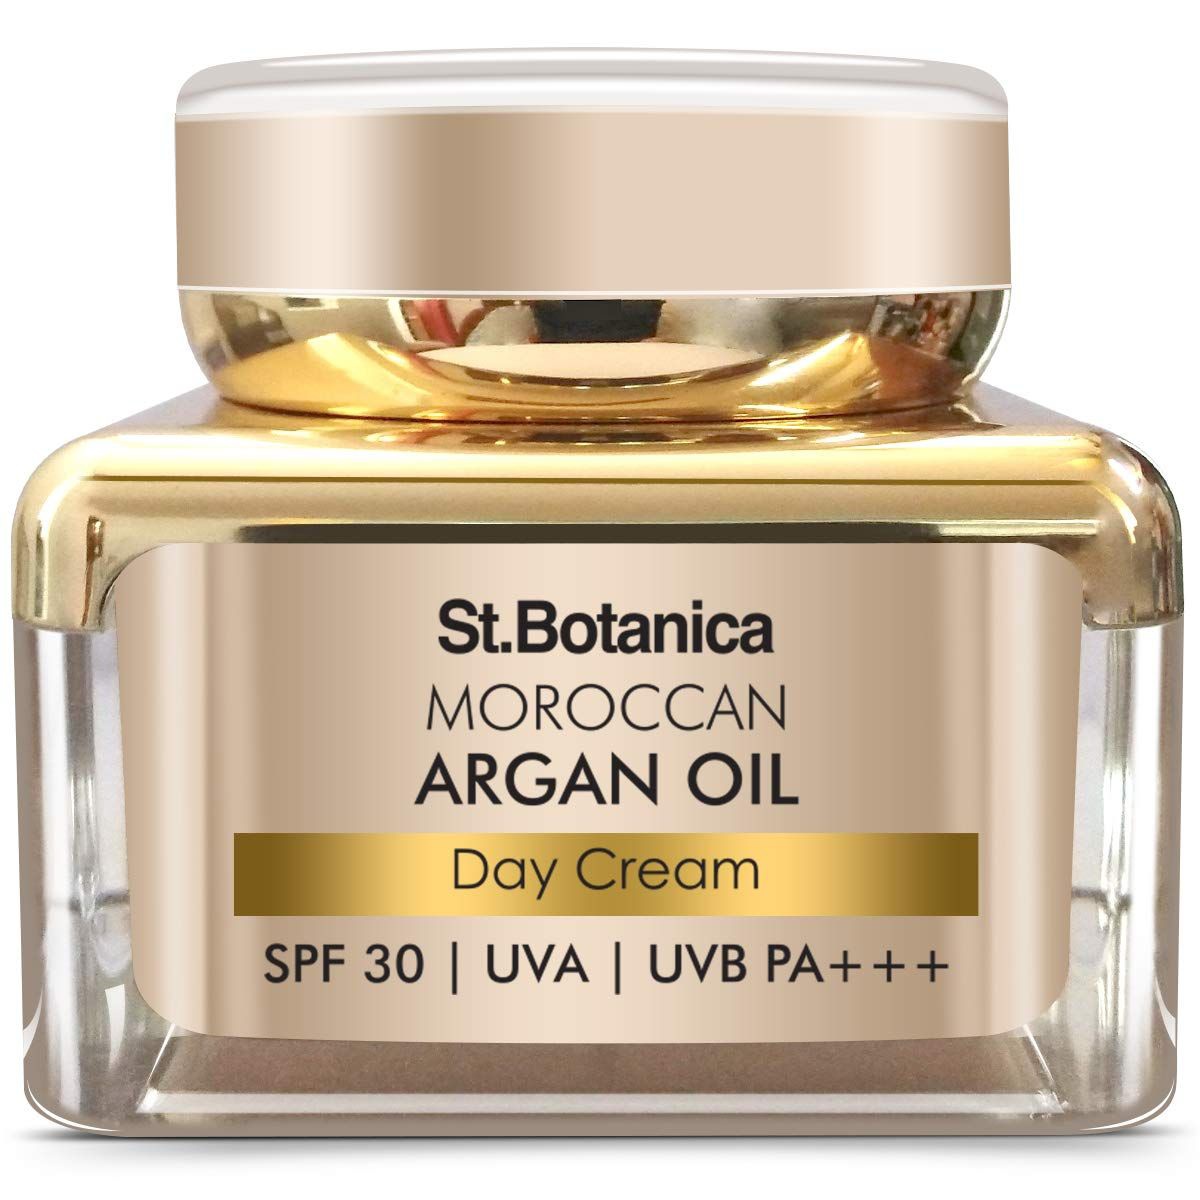 St. Botanica Moroccan Argan Oil Day Cream With SPF 30 UVA/UVB Pa